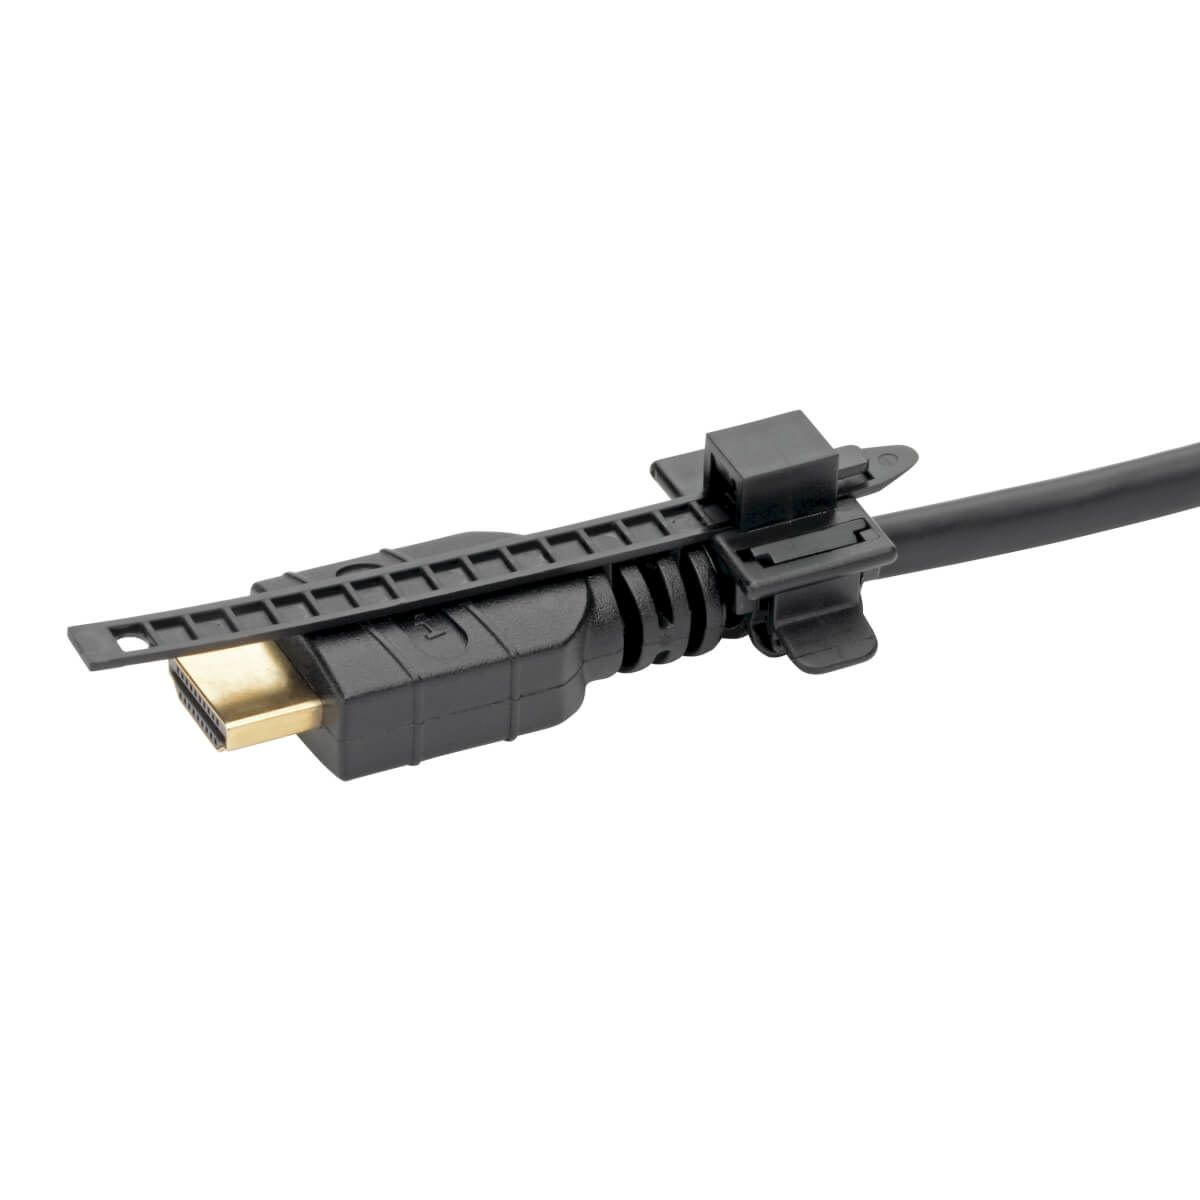 HDMI Cable Lock Clamp Tie Screw